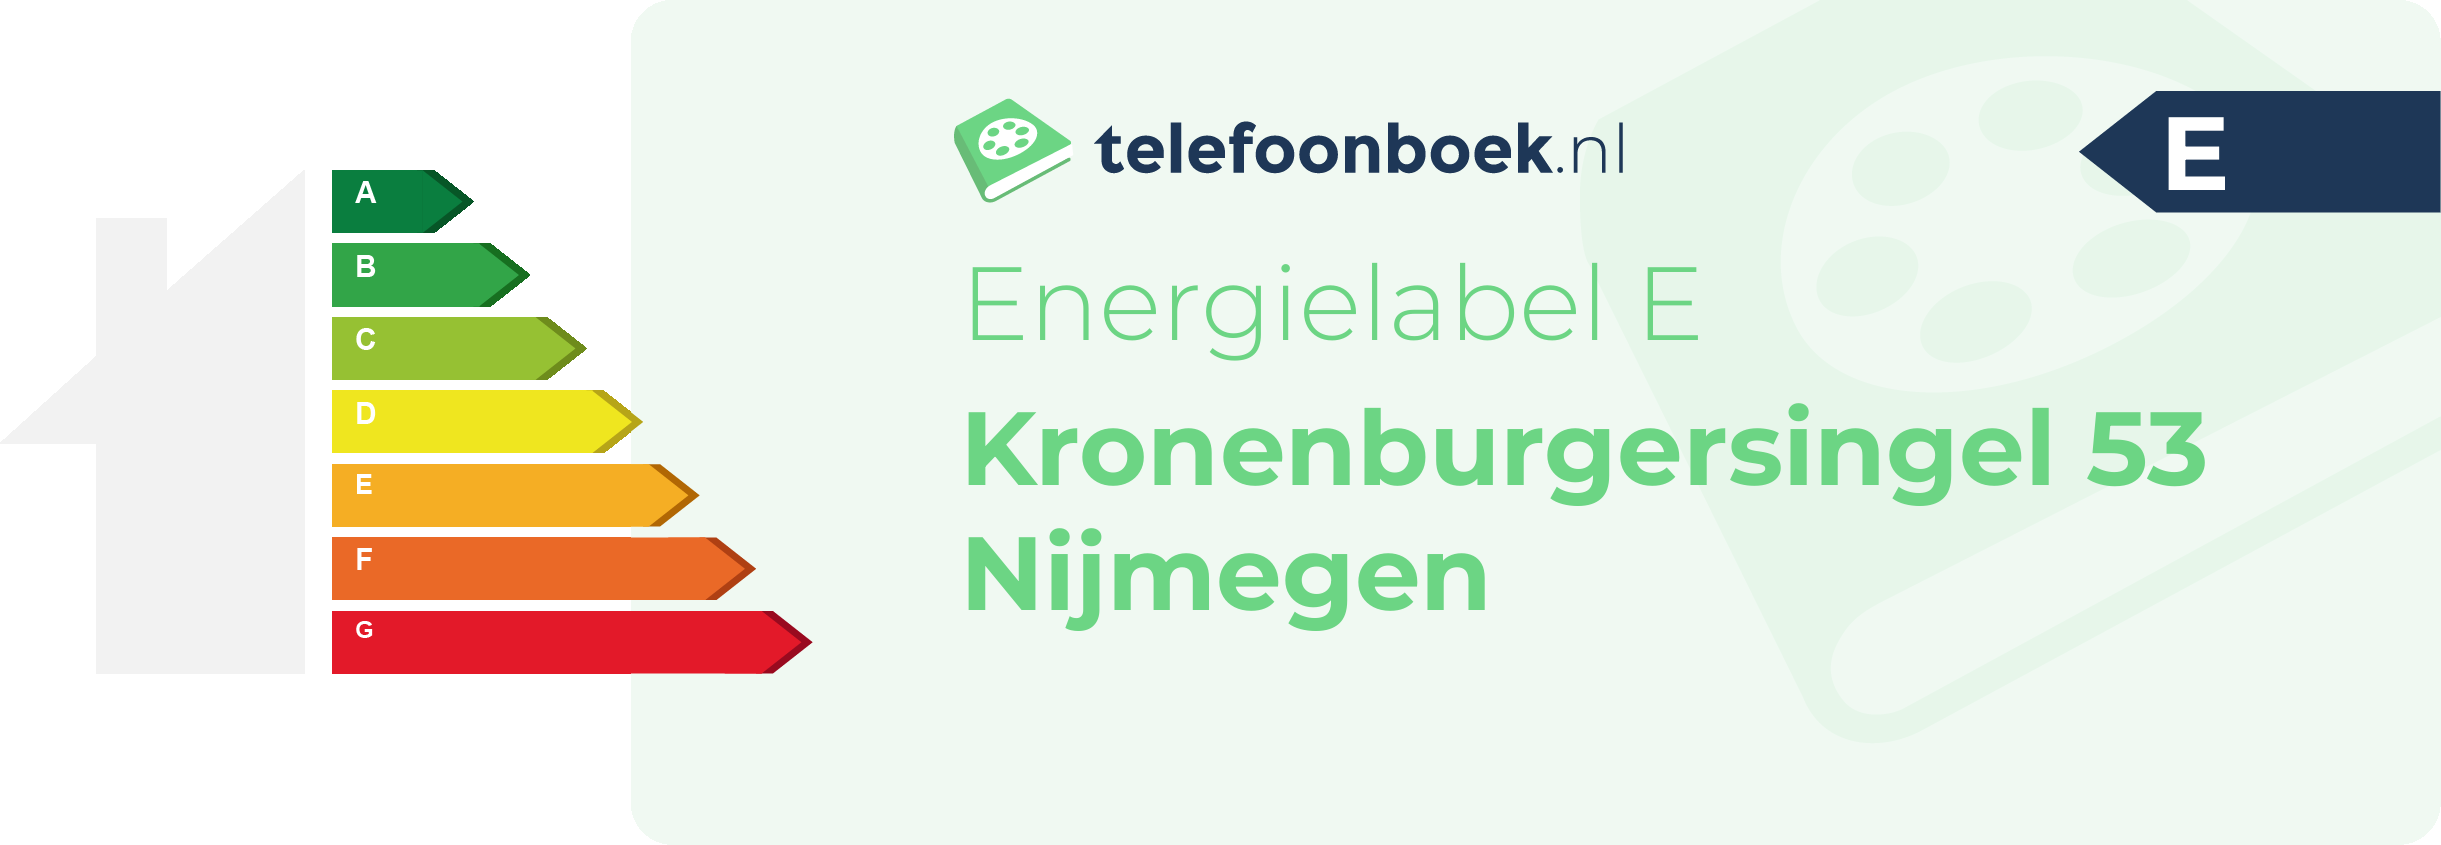 Energielabel Kronenburgersingel 53 Nijmegen